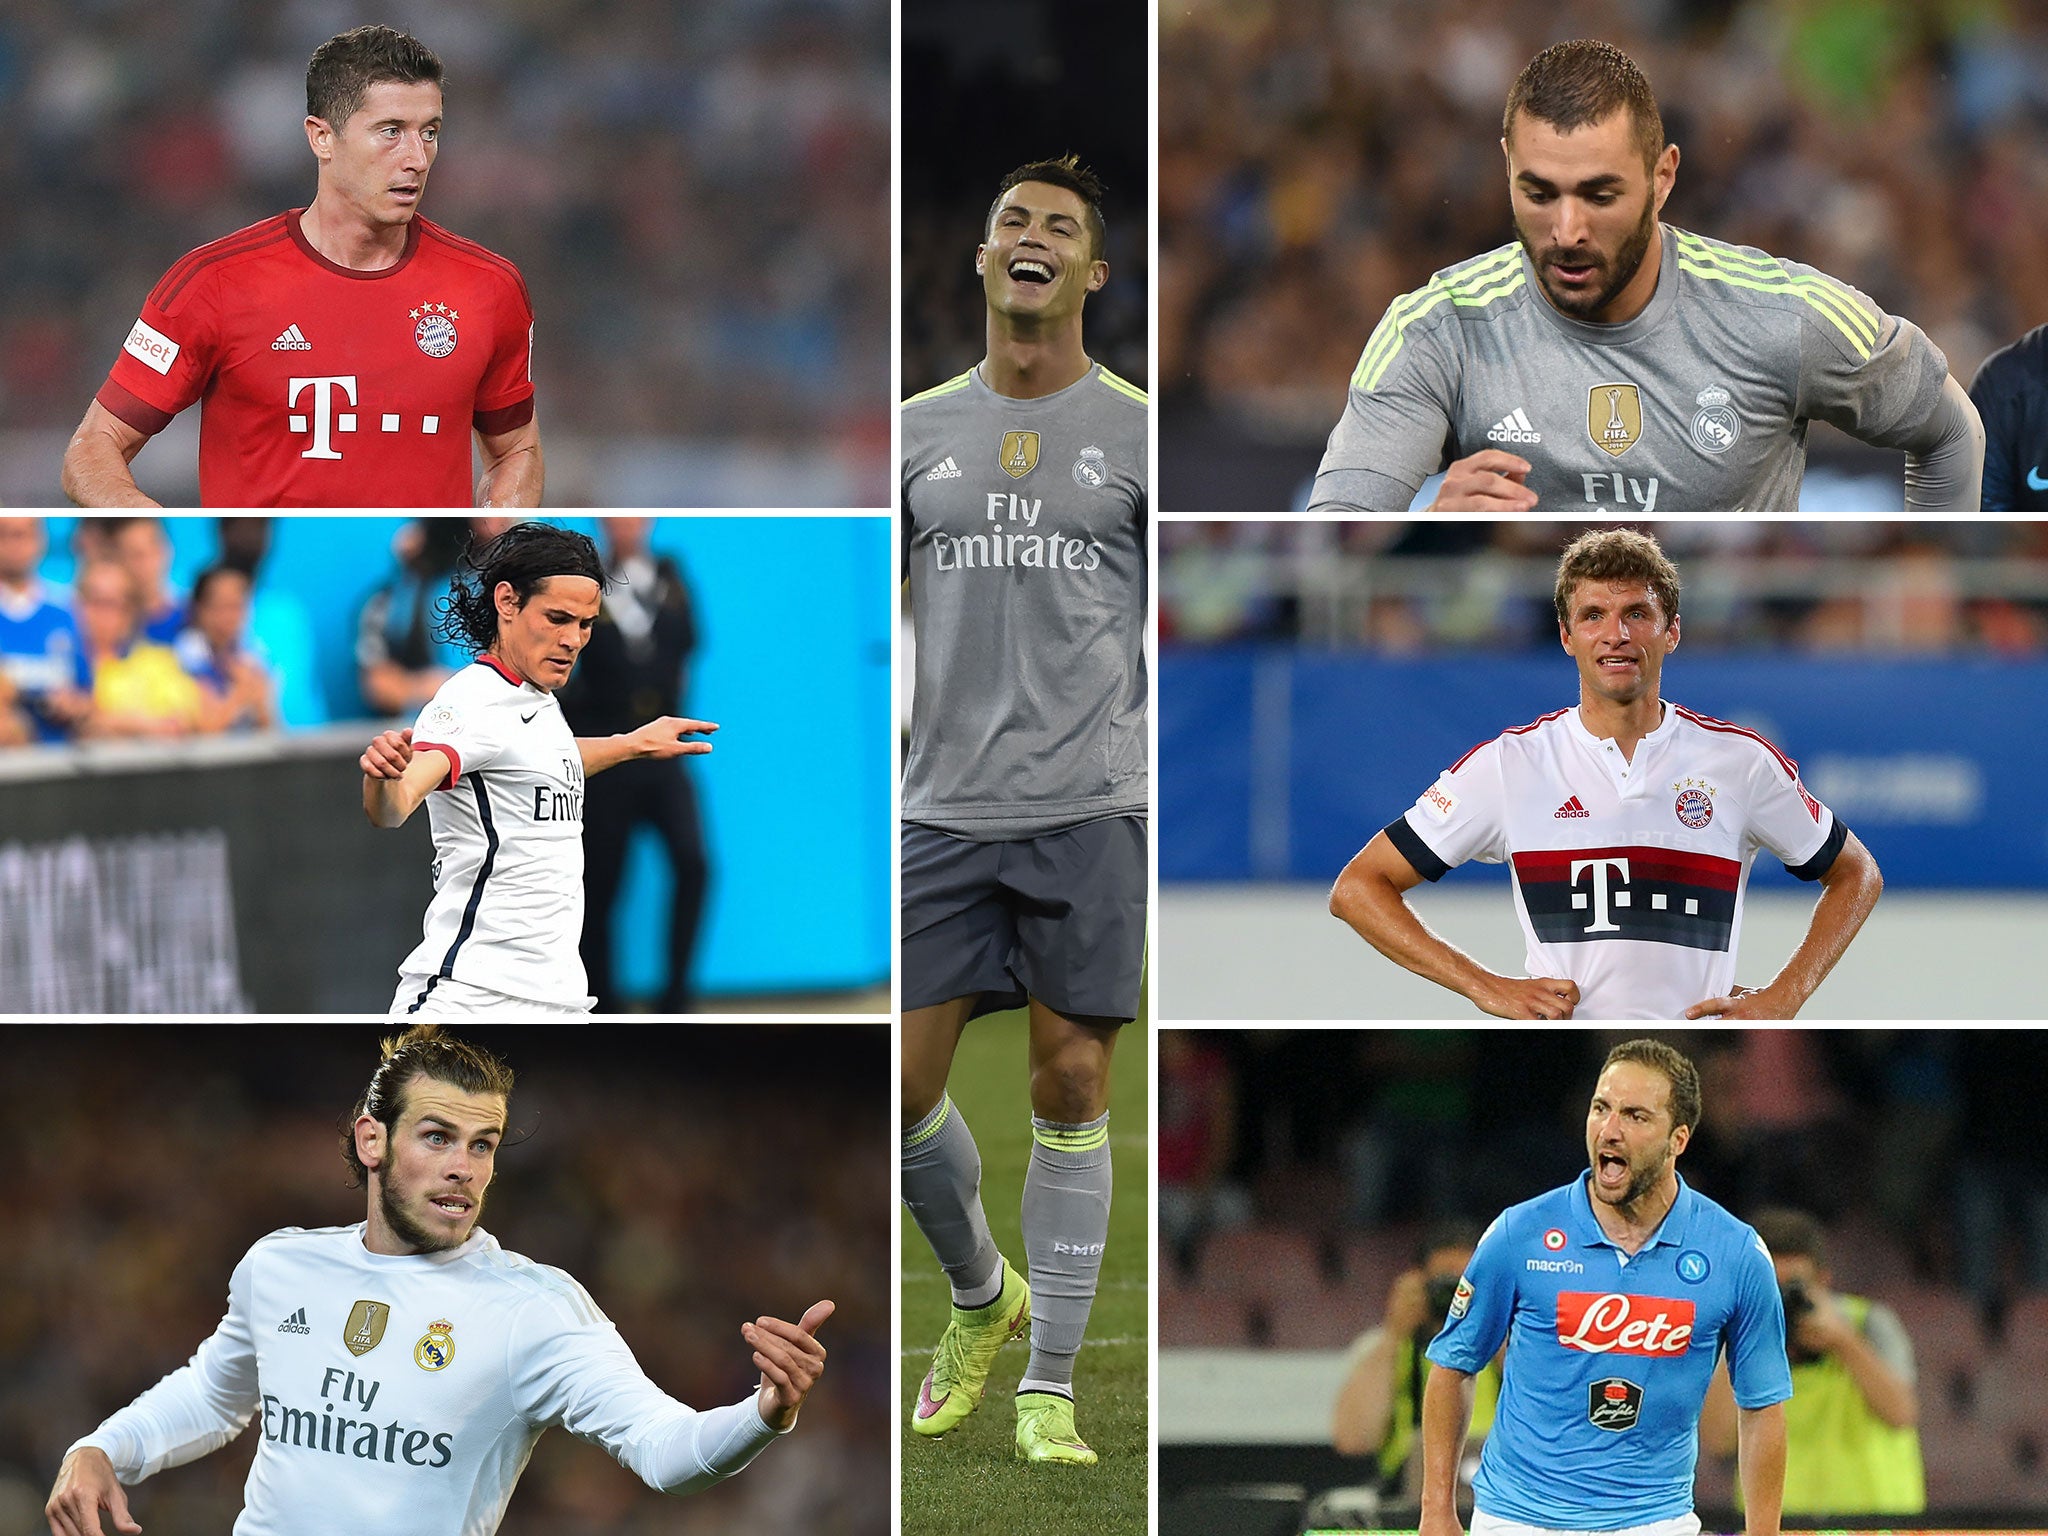 Robert Lewandowski, Edinson Cavani, Gareth Bale, Cristiano Ronaldo, Karim Benzema, Thomas Muller and Gonzalo Higuain